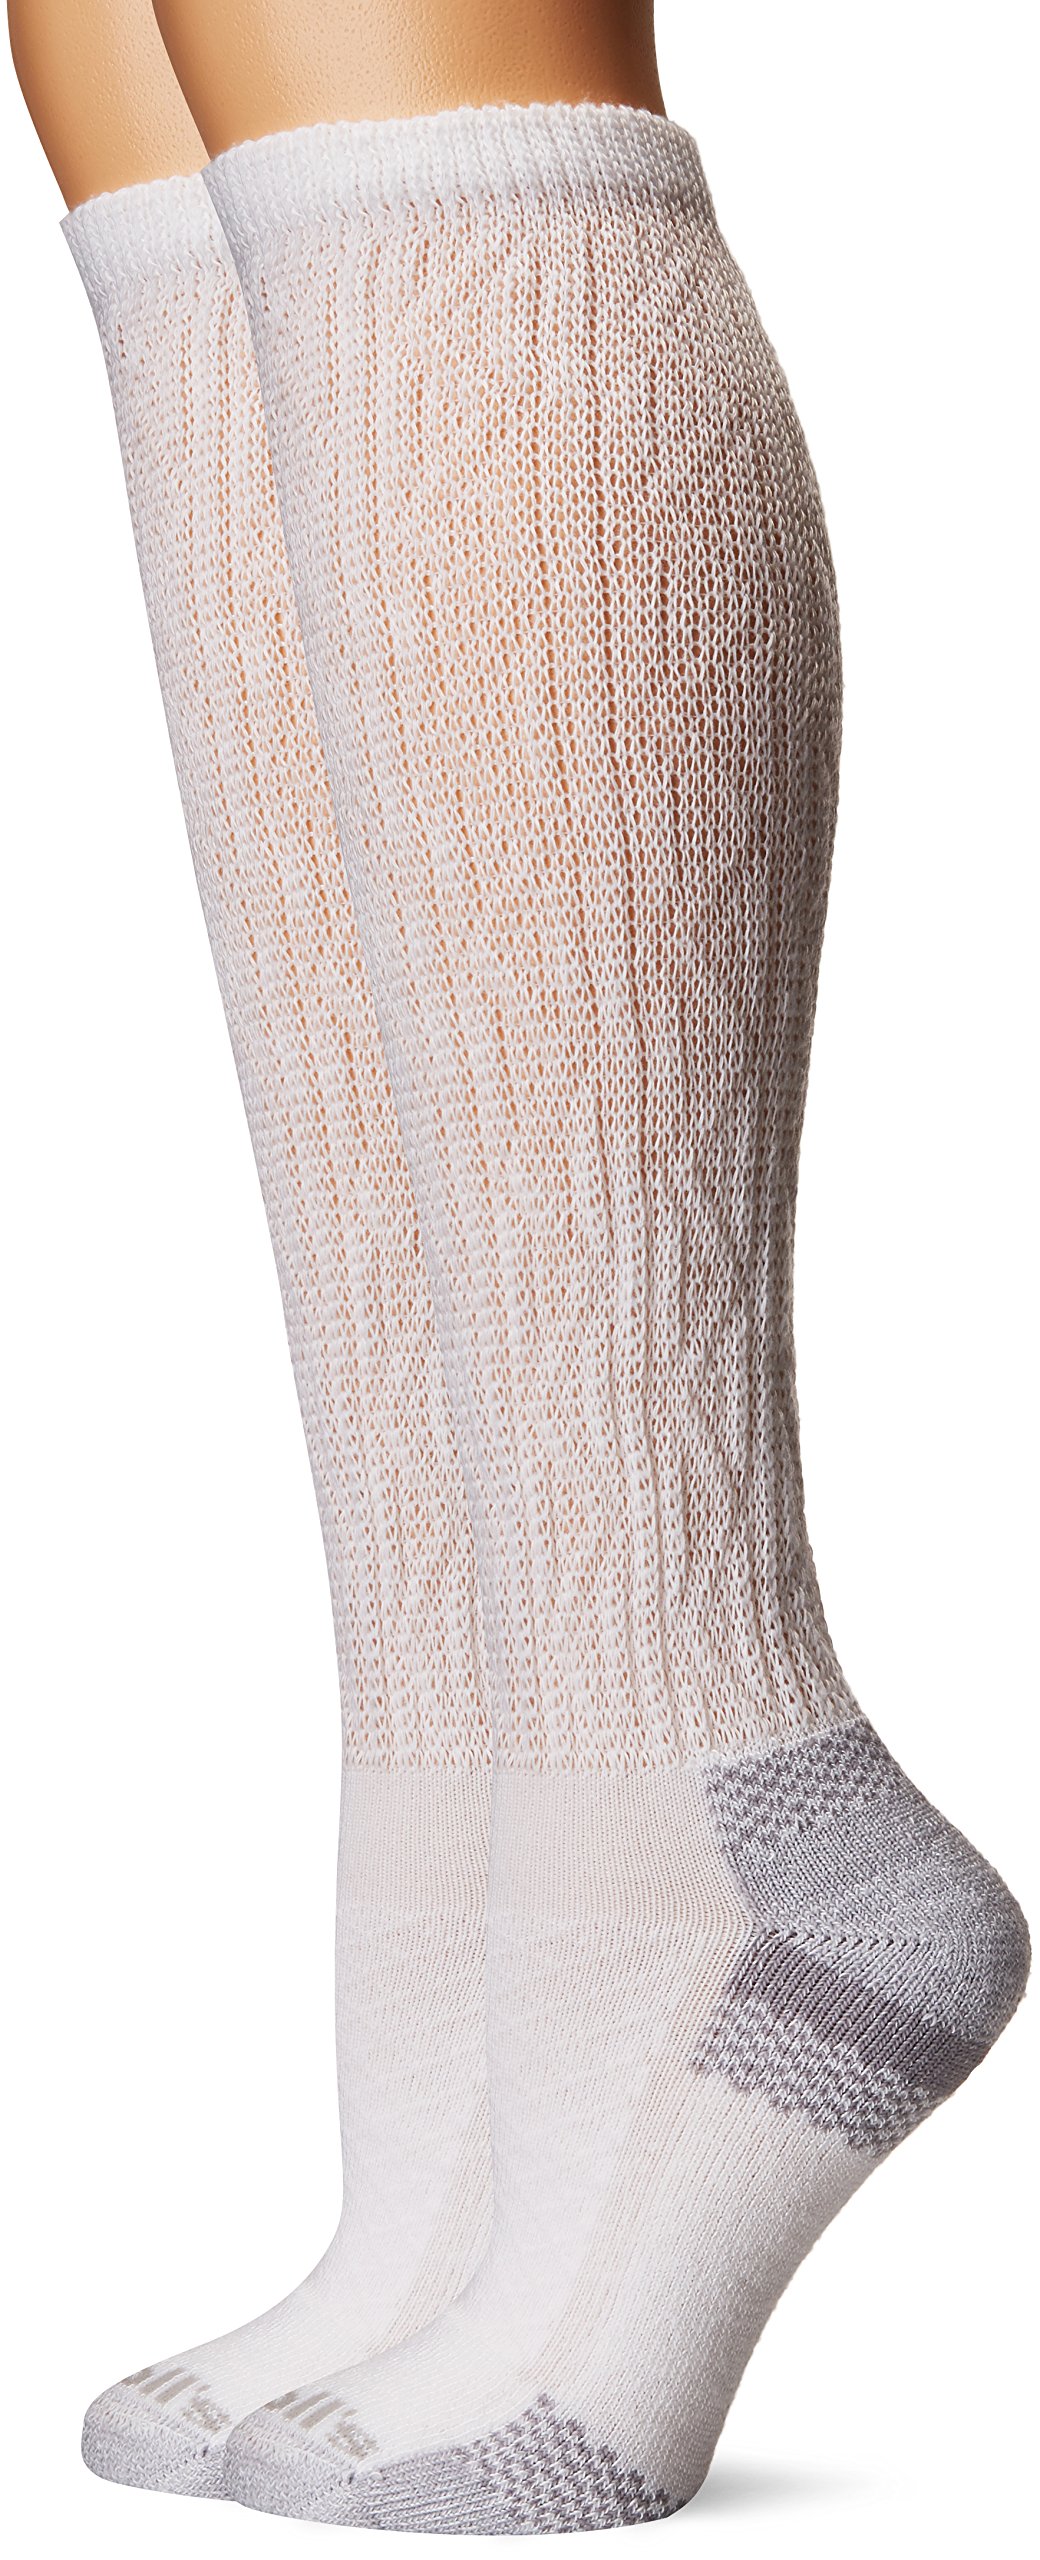 Dr. Scholl's Women's Advanced Relief Blisterguard Socks - 2 & 3 Pair Packs - Non-Binding Cushioned Moisture Management